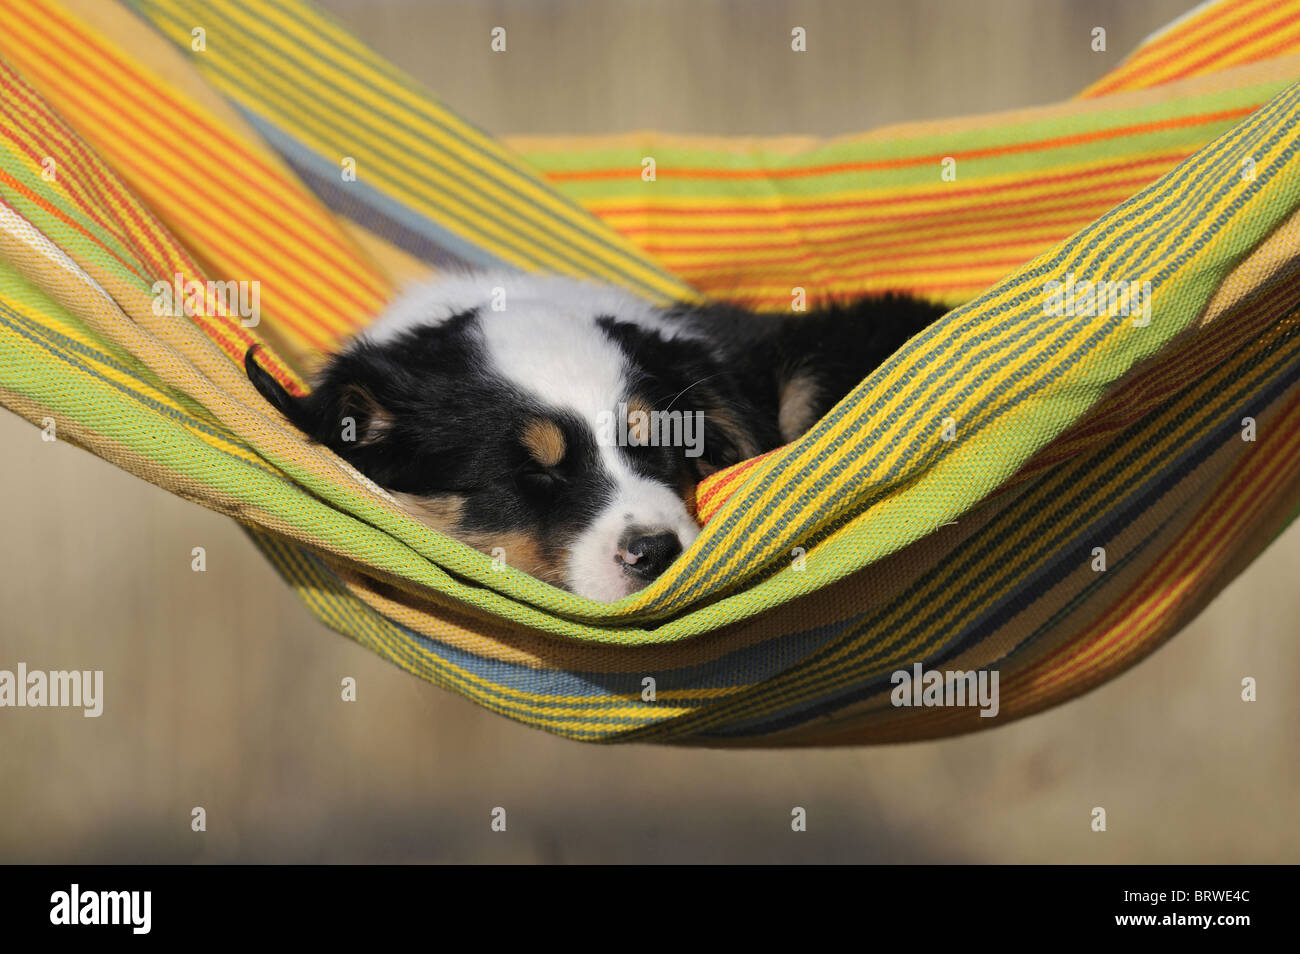 Australian Shepherd (Canis lupus familiaris). Puppy sleeping in a hammock. Stock Photo